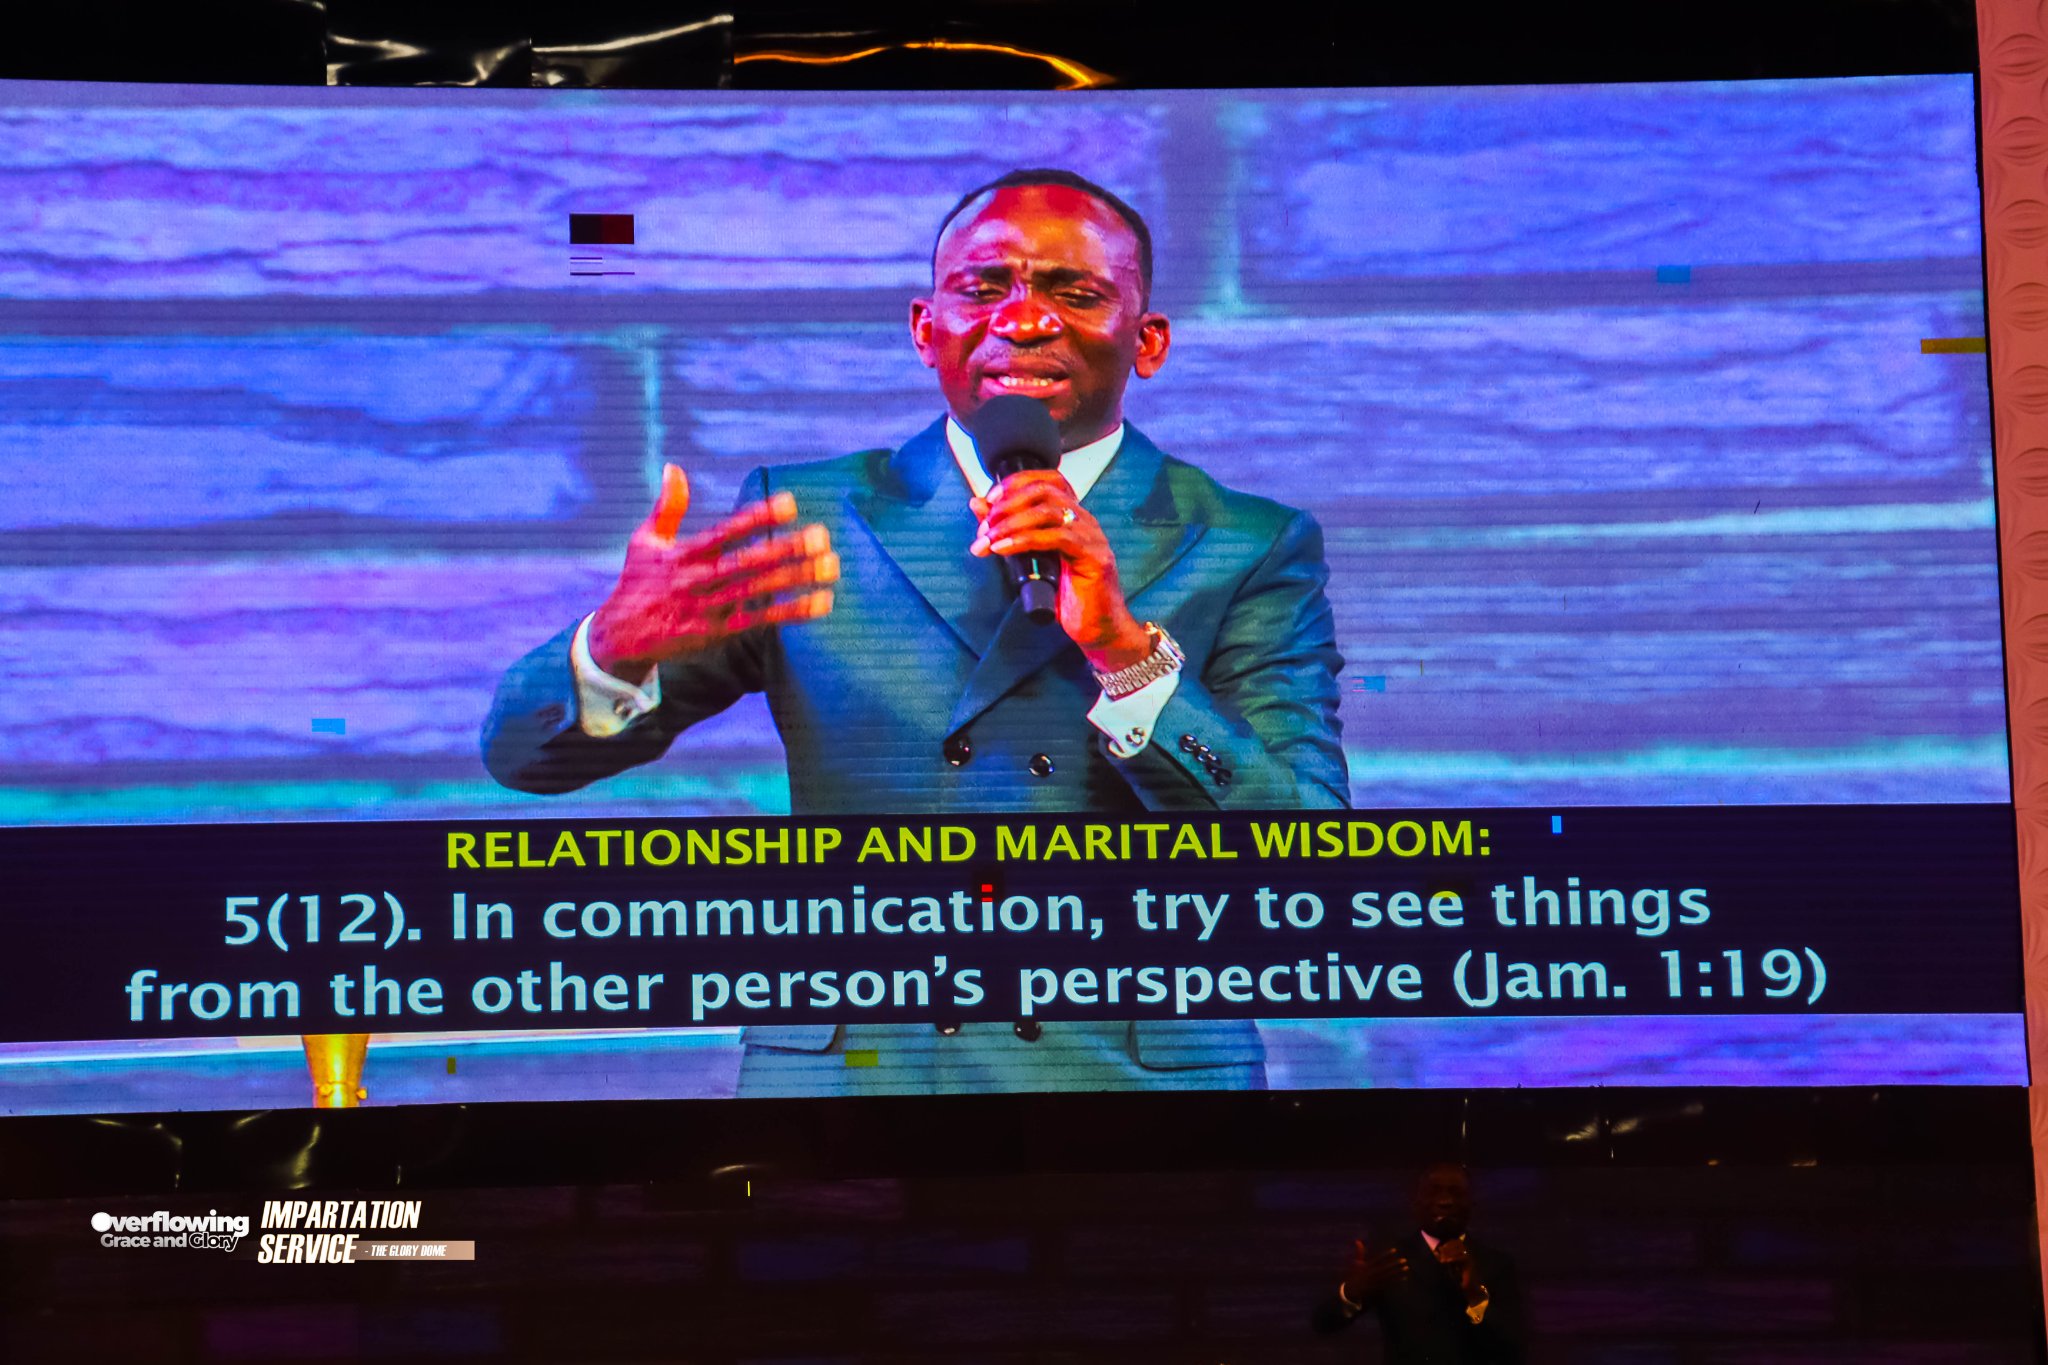 Relationship and Marital Wisdom